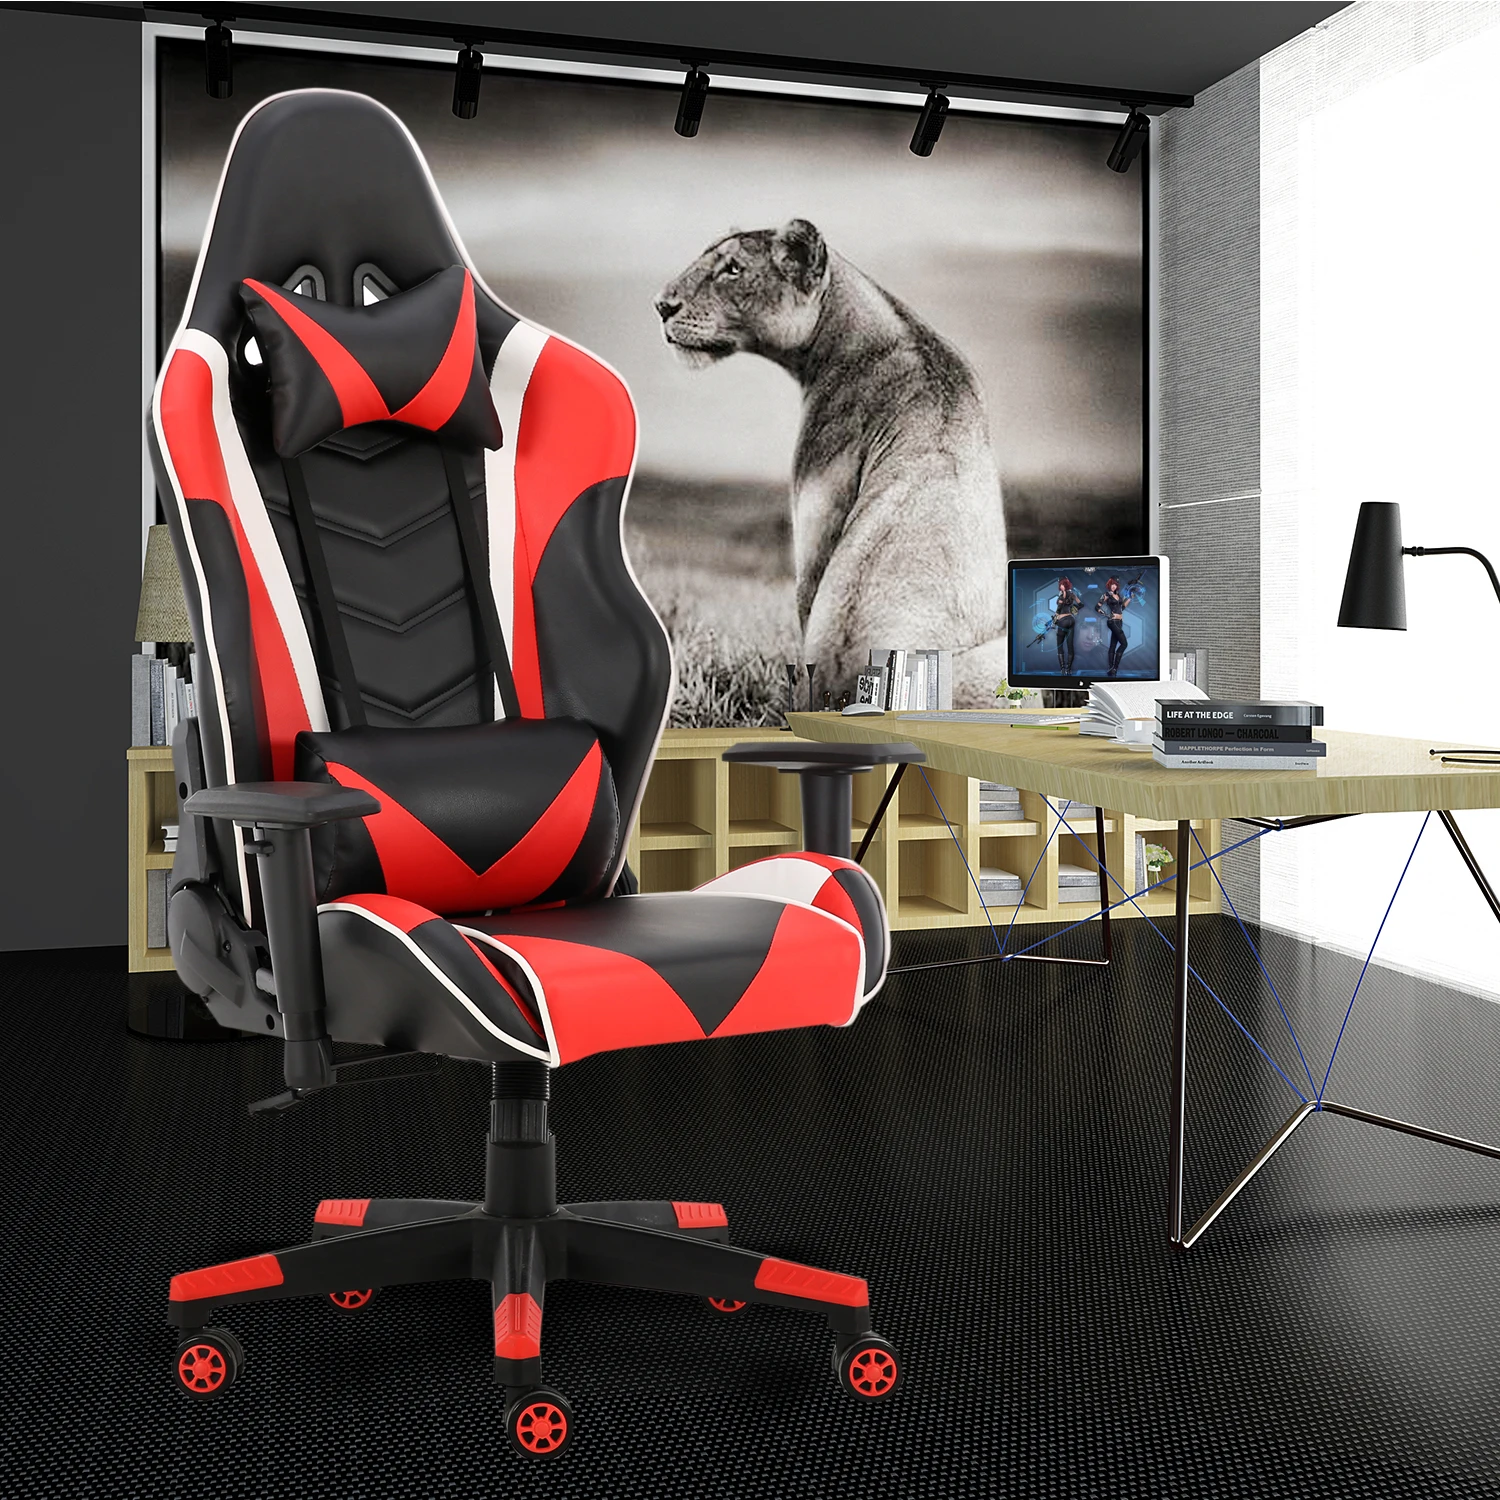 4. Cómoda silla de oficina para videojuegos